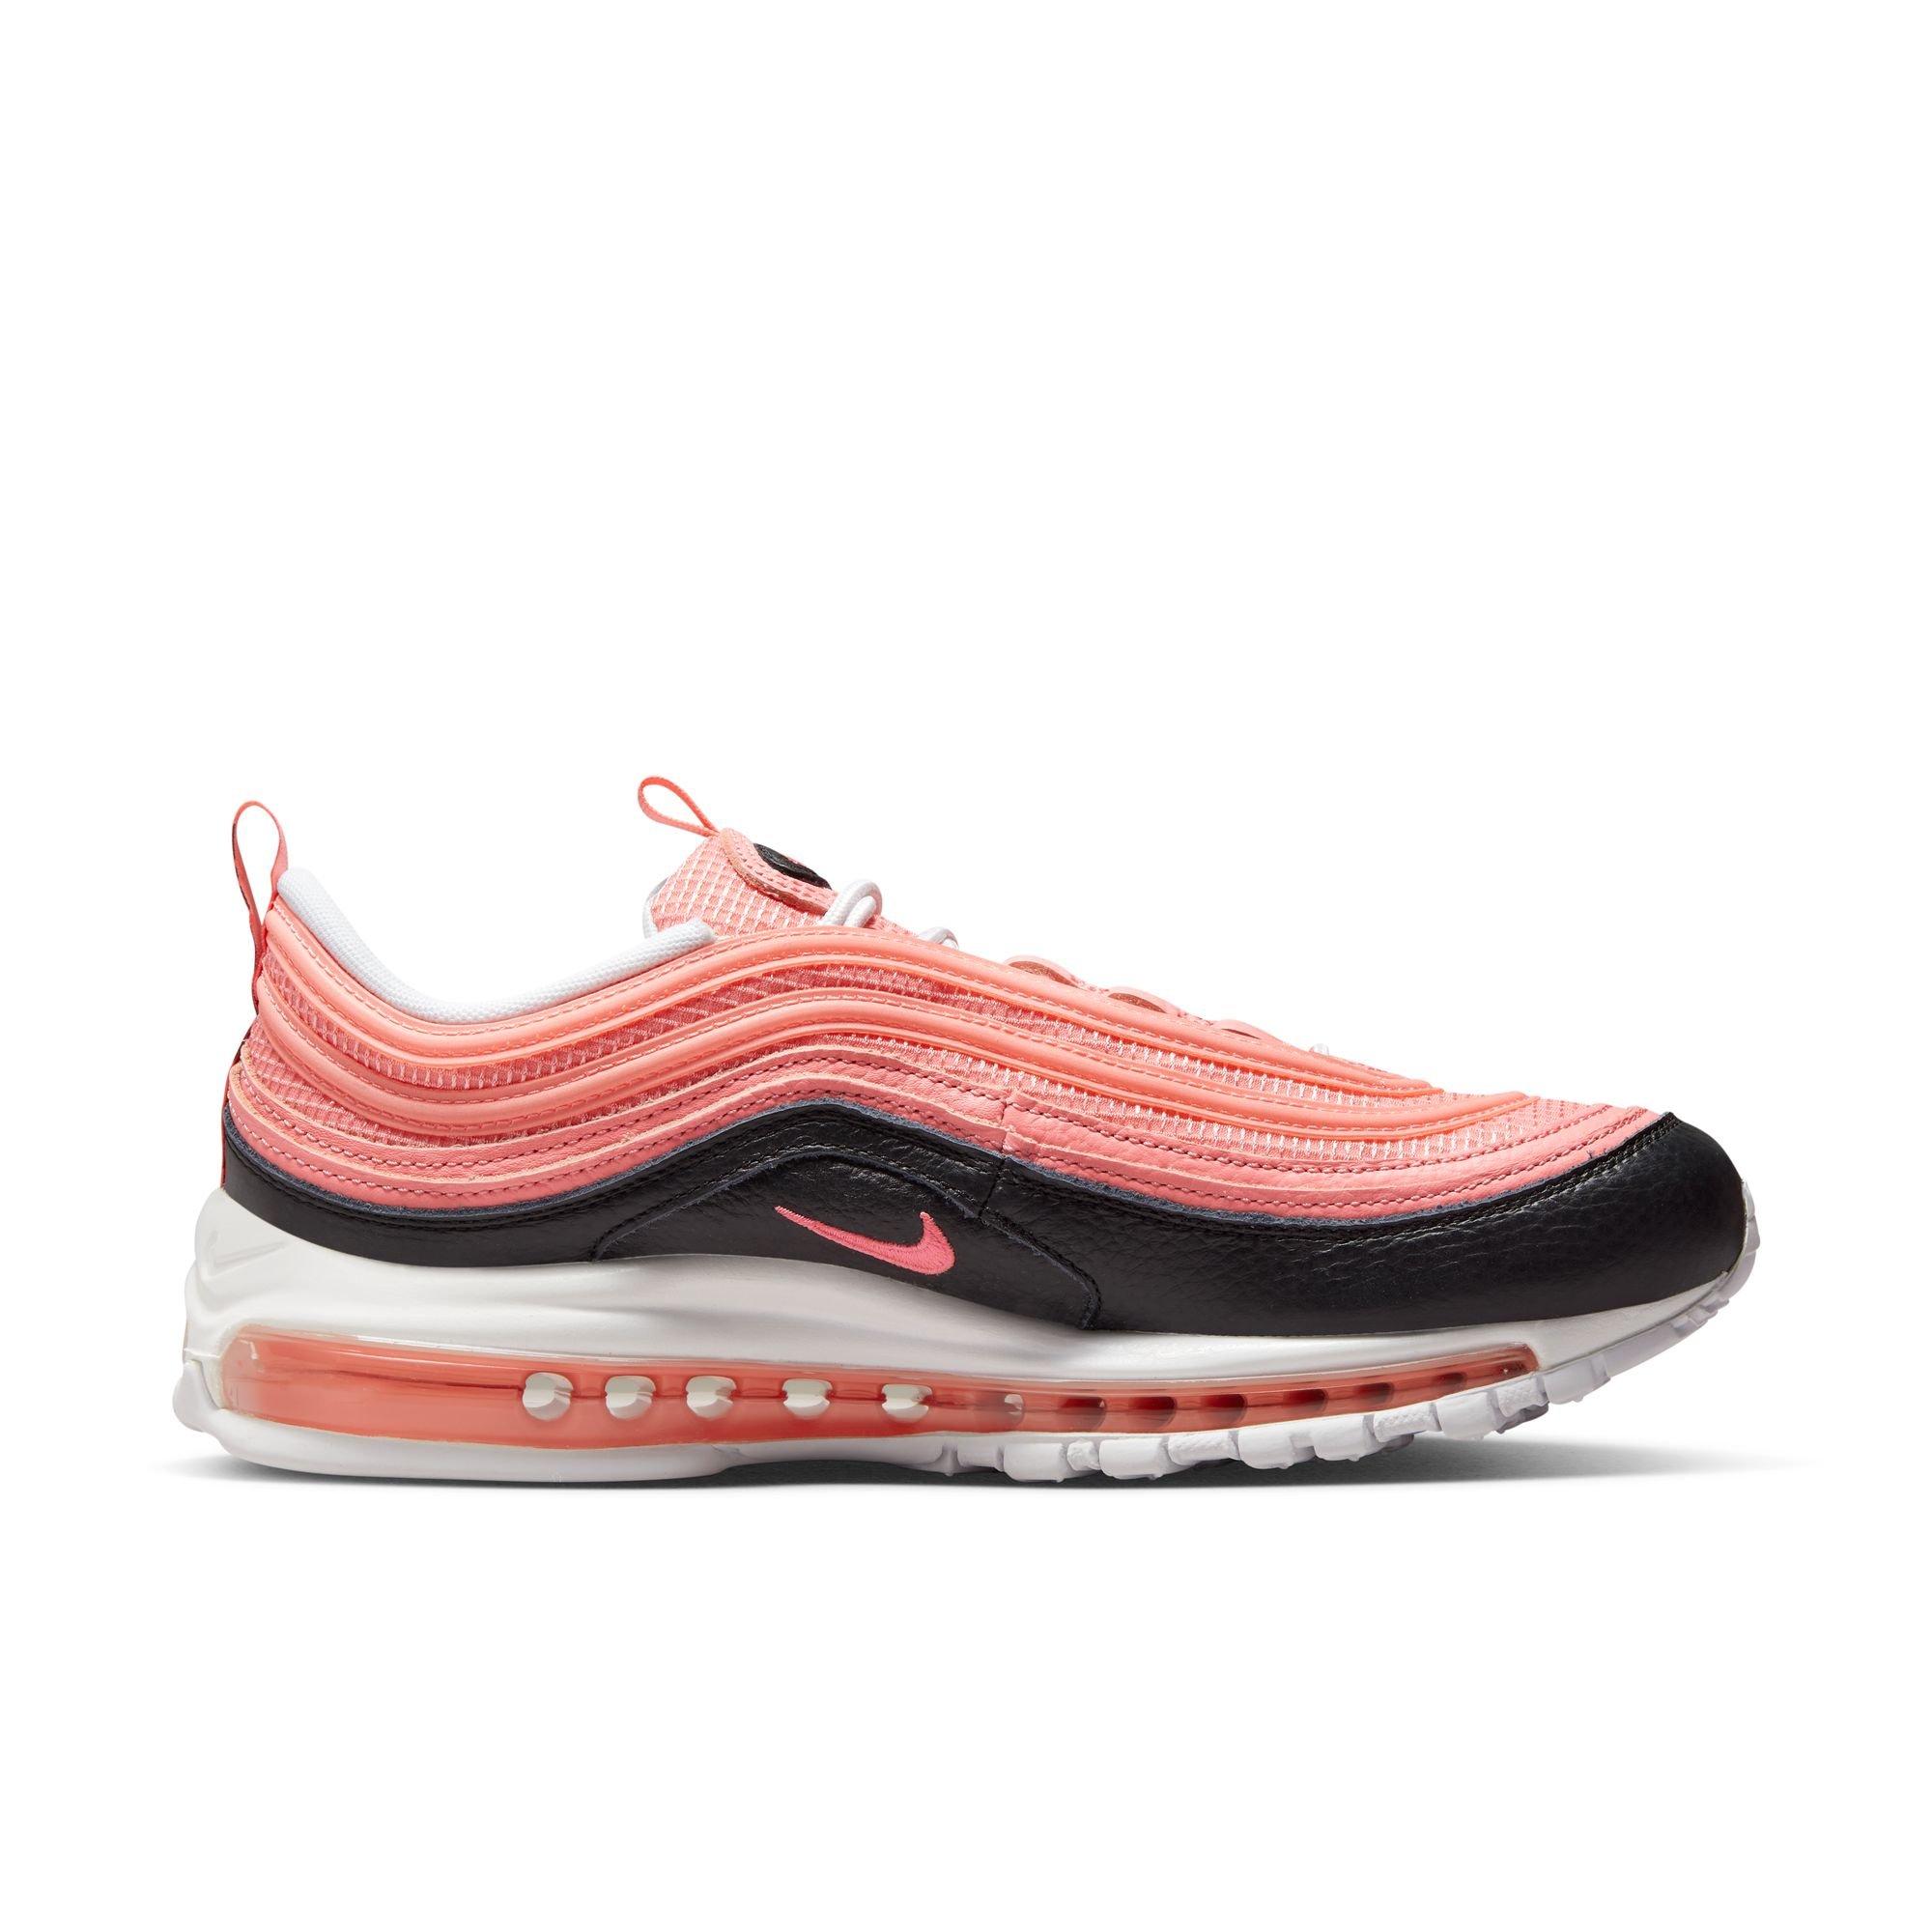 Pekkadillo terrorist stijfheid Nike Air Max 97 "Pink Gaze/Hyper Pink/White/Black" Men's Shoe